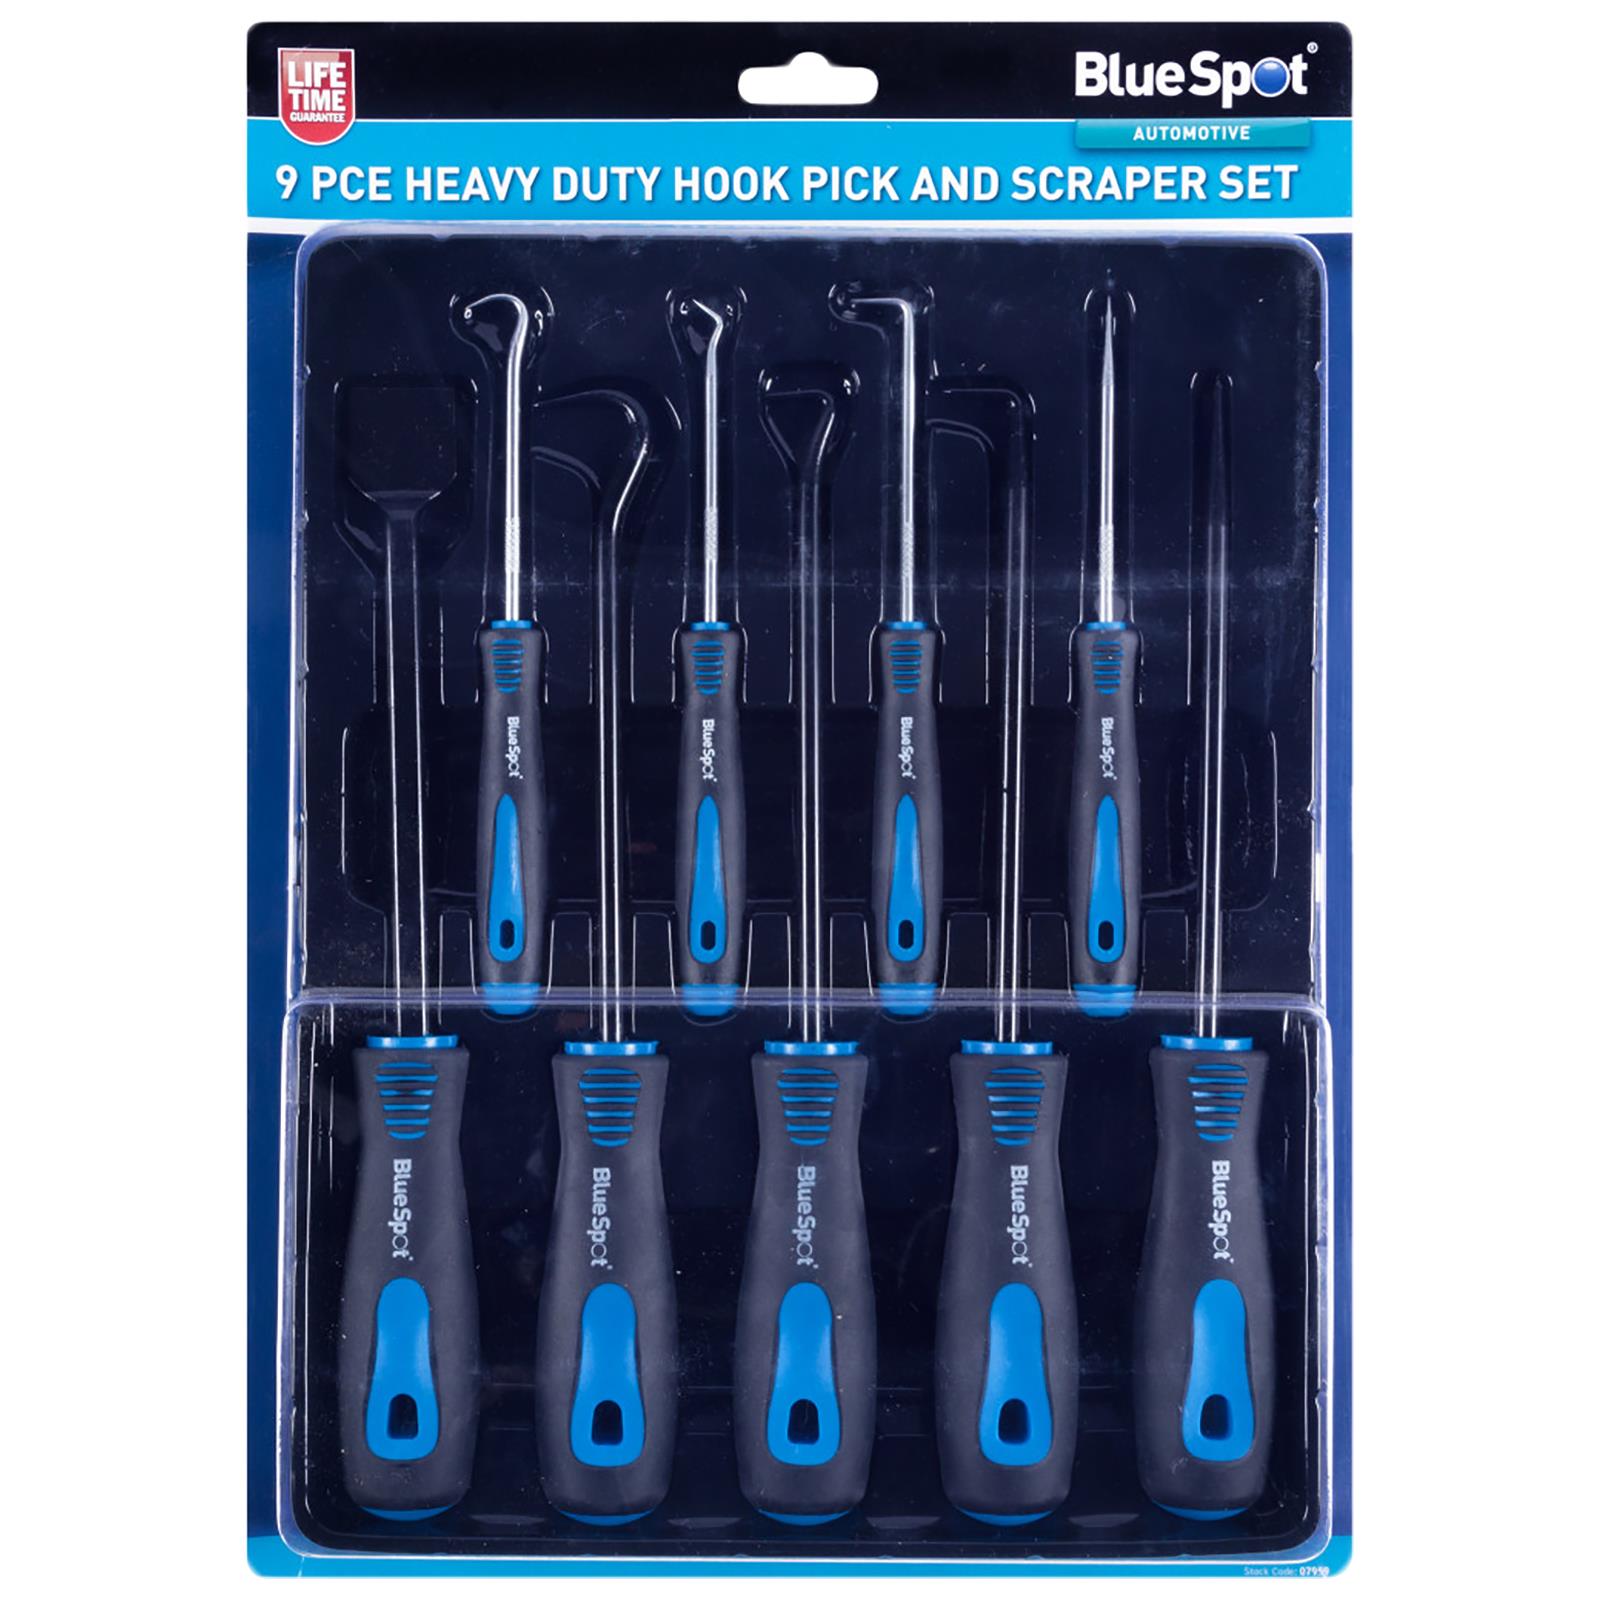 BlueSpot Hook Pick and Scraper Set Heavy Duty 9 Piece Soft Grip Handles